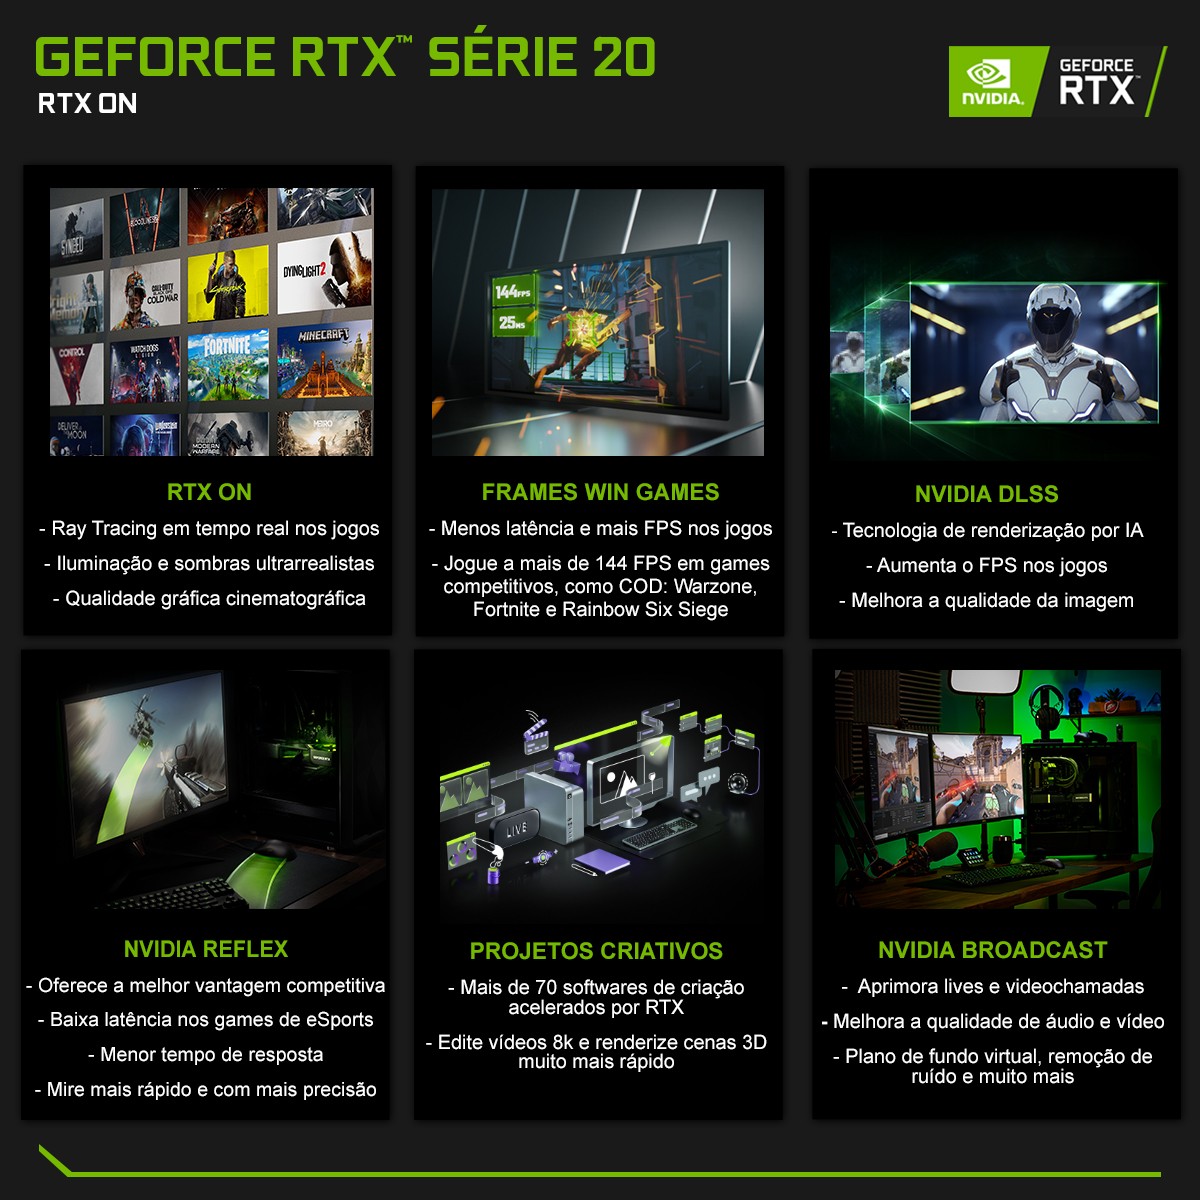 Placa de Vídeo Zotac GeForce RTX 2080 TI AMP, 11GB GDDR6, DLSS, Ray Tracing, ZT-T20810D-10P